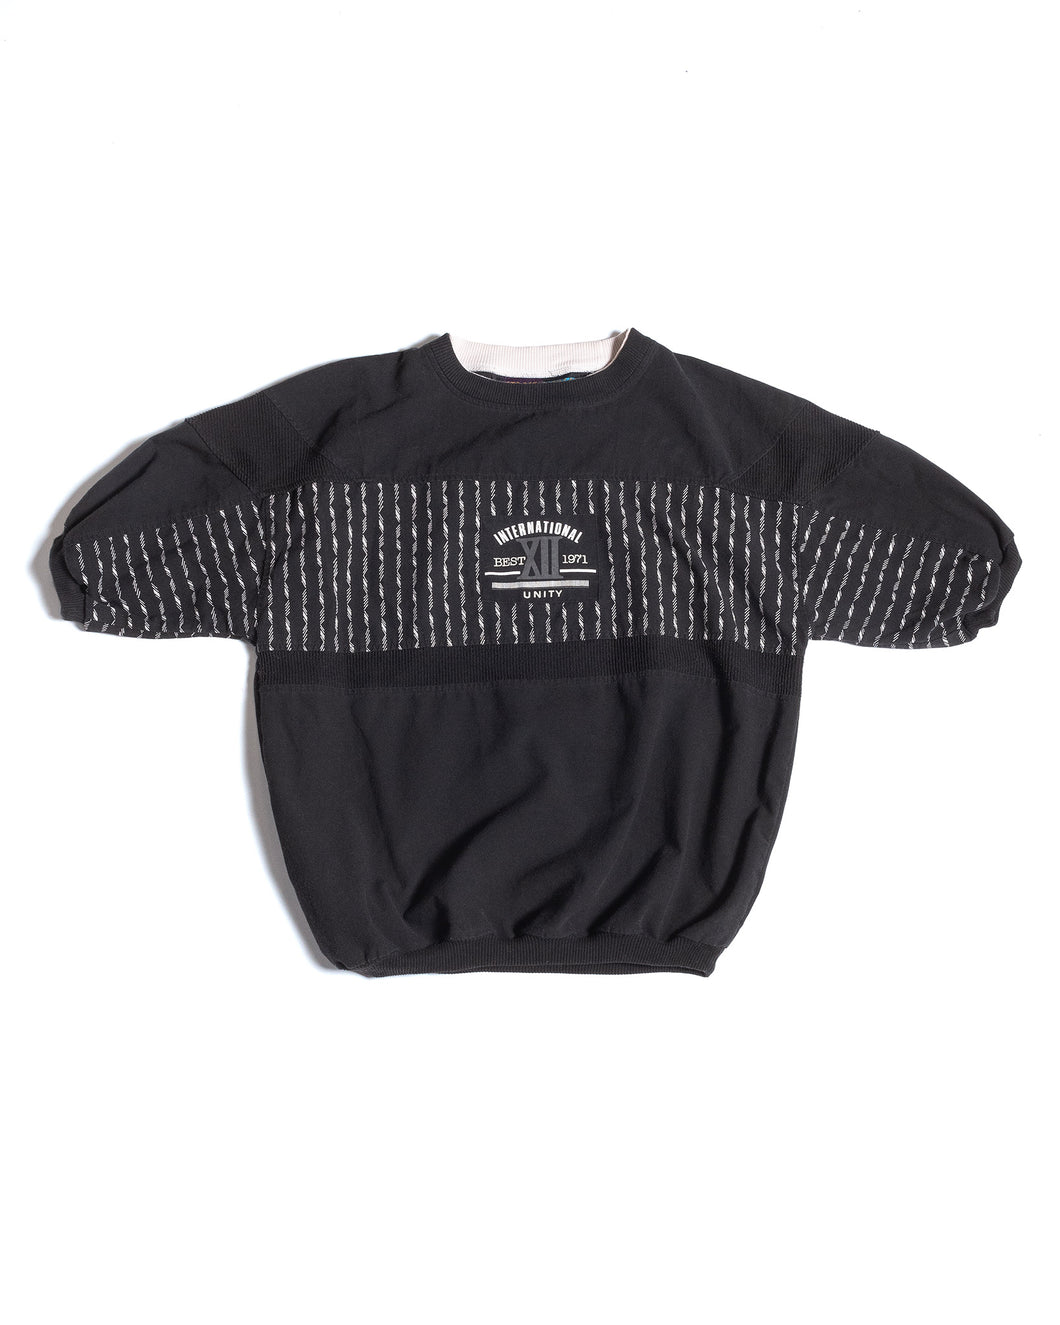 80s Black Short Sleeve Graphic Sweatshirt Cardigan Street Scenes